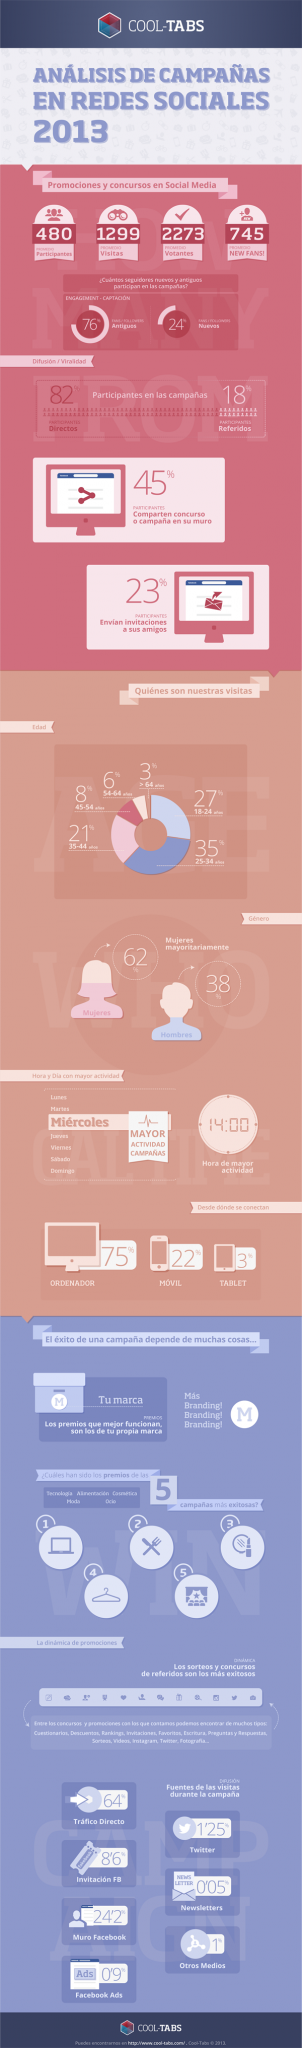 infografia-2013-Cool-Tabs-estudio-pacoviudes1